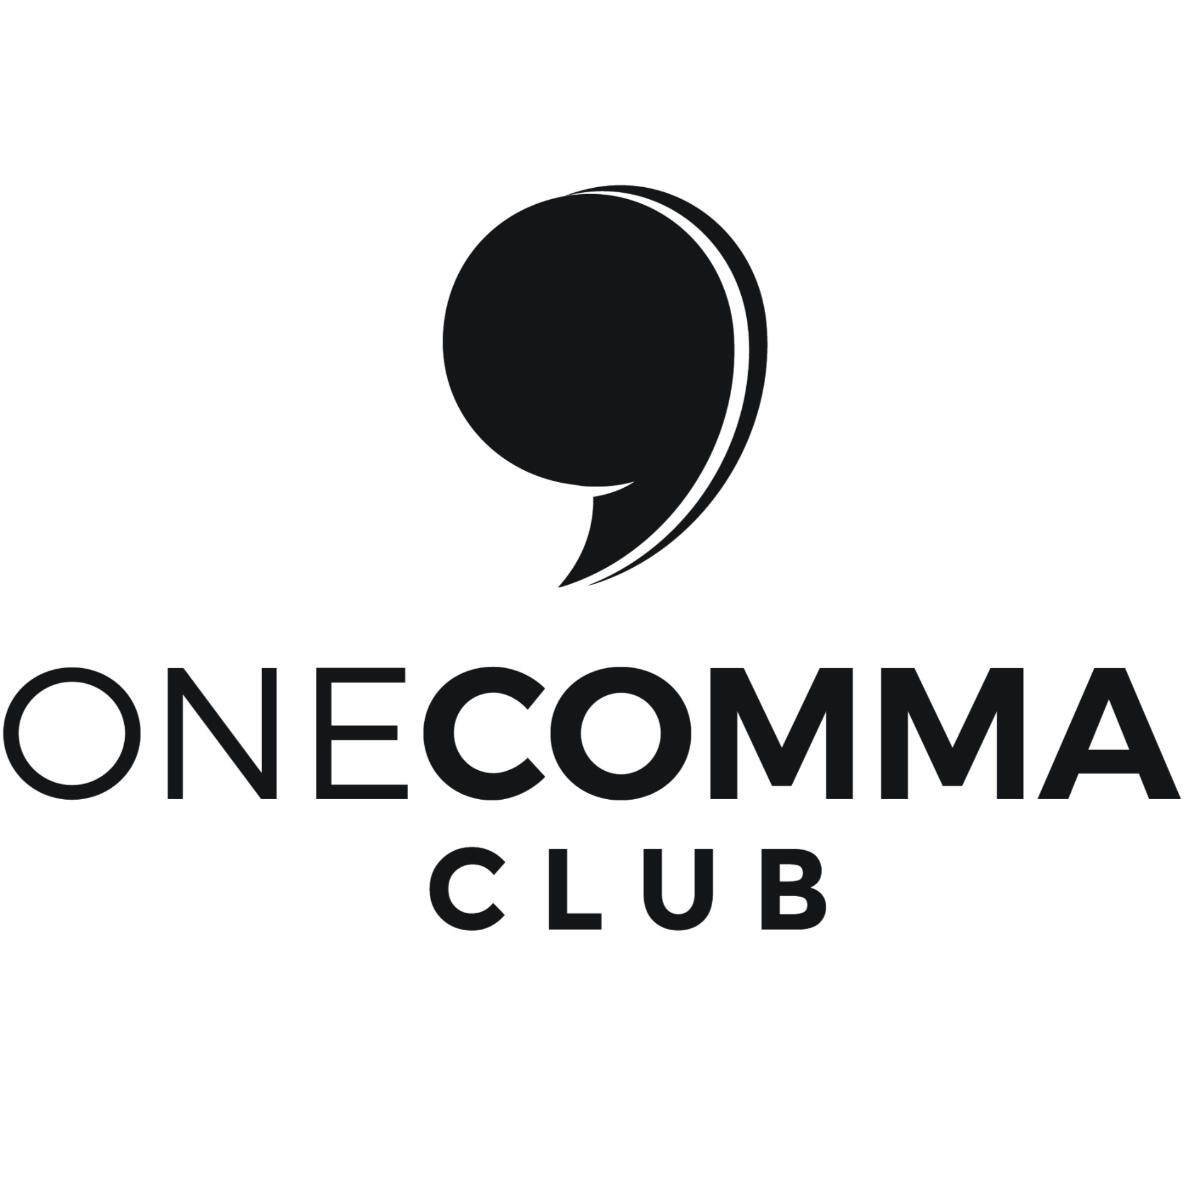 One Comma Club